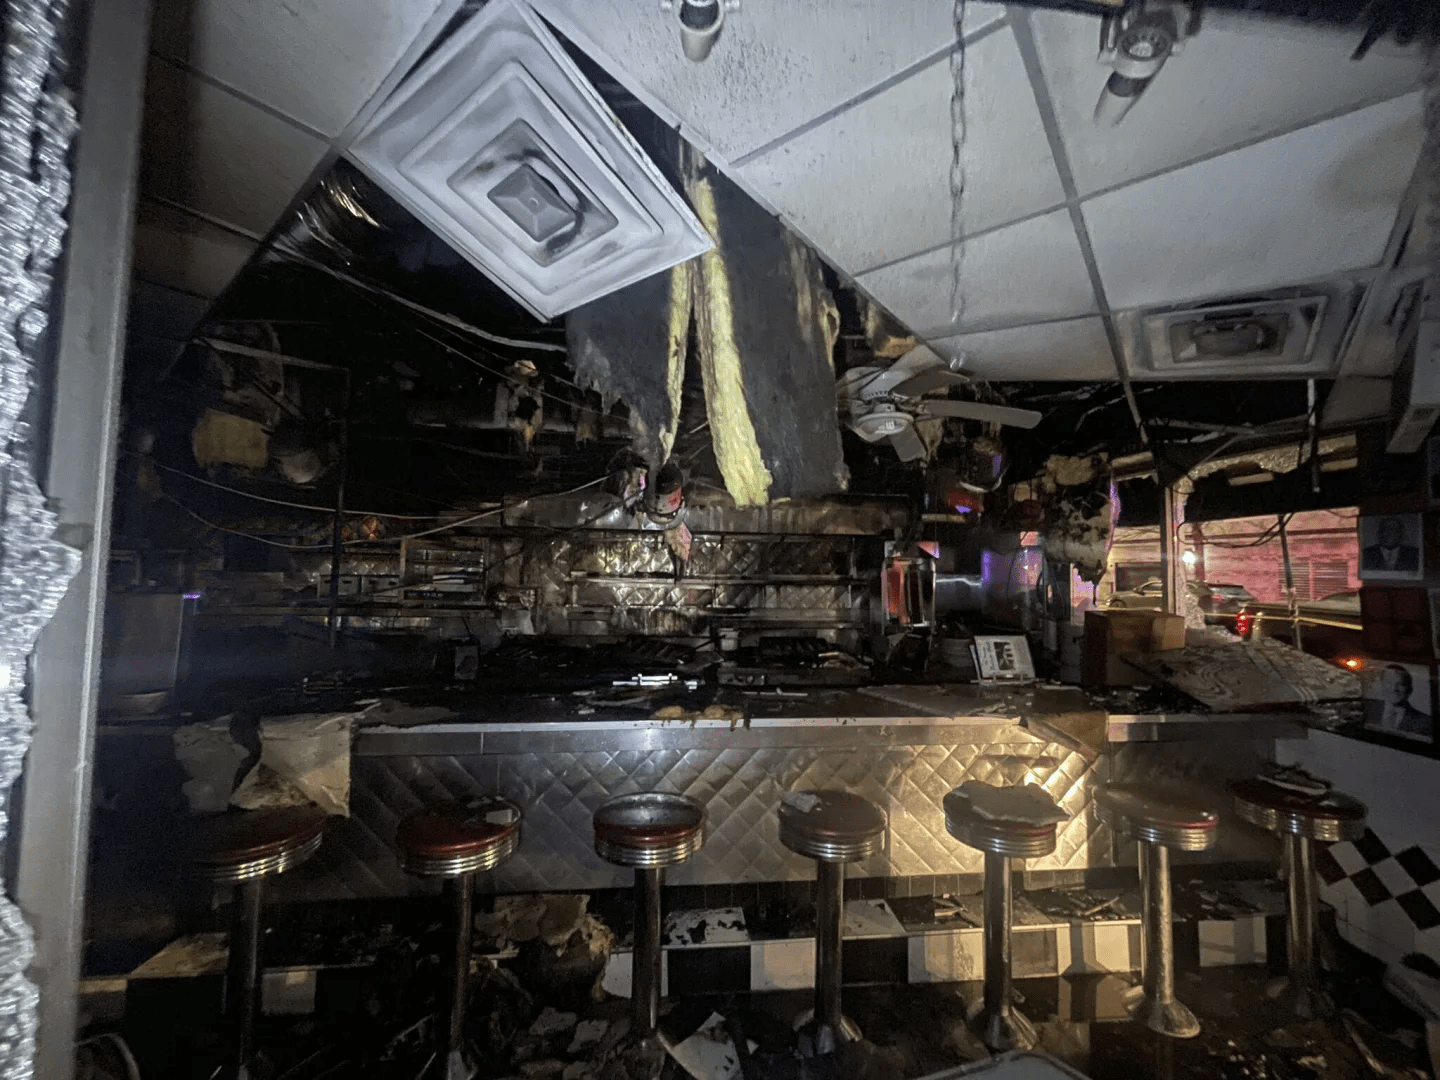 Palace Grill fire damage (Chicago Fire Dept. via AP)